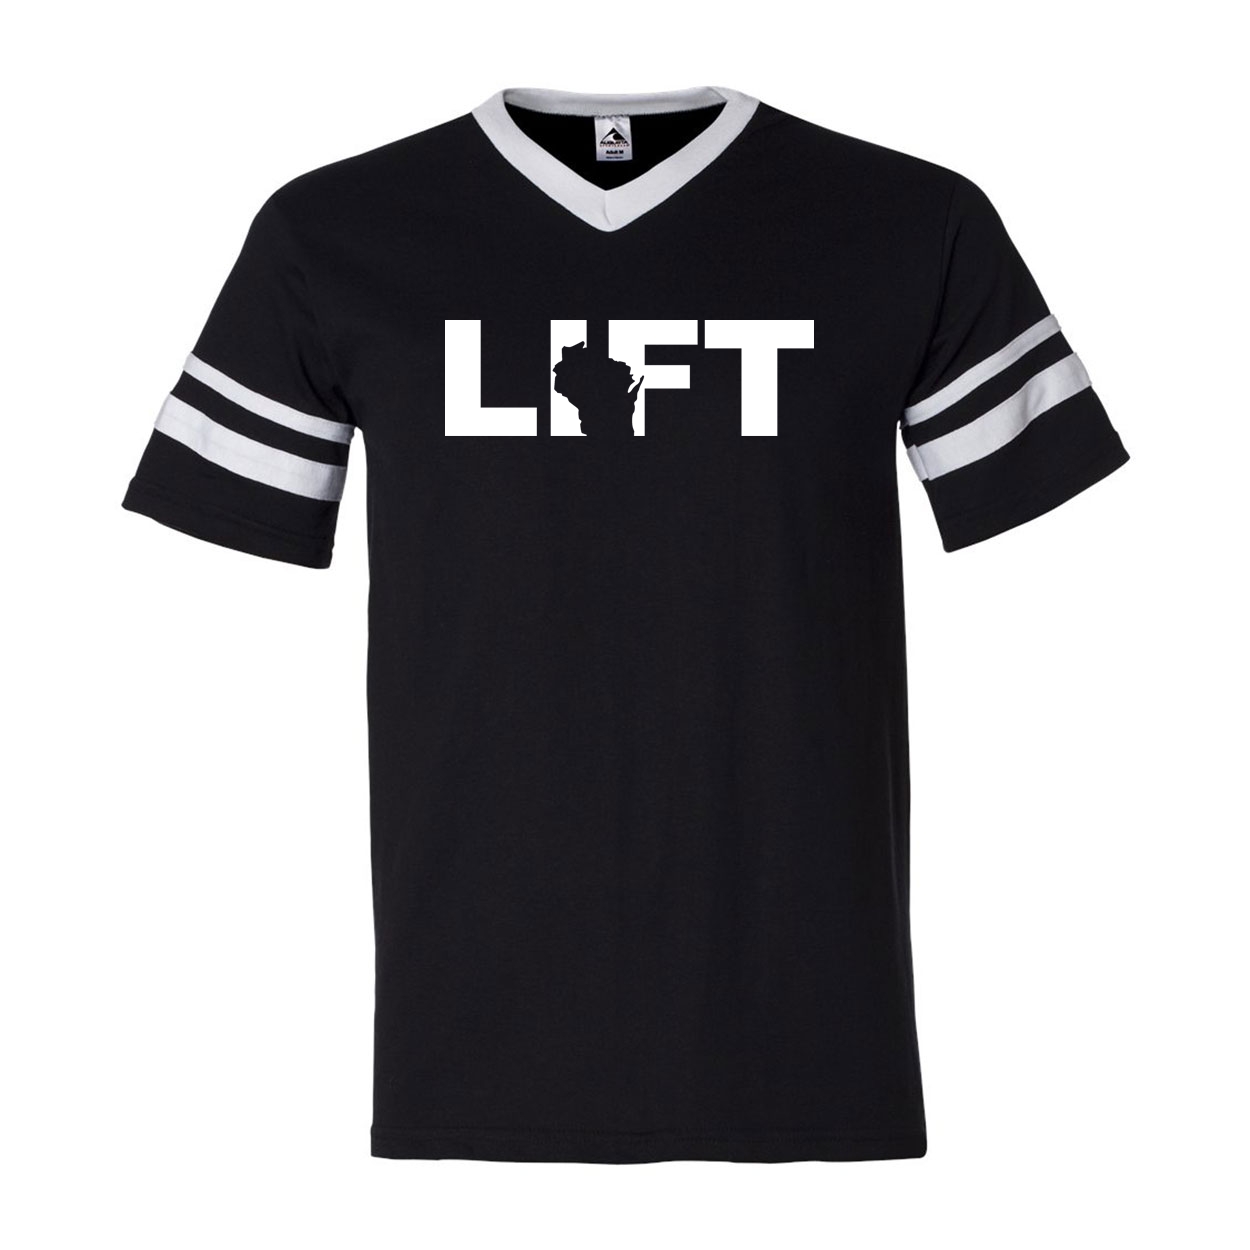 Lift Wisconsin Classic Premium Striped Jersey T-Shirt Black/White (White Logo)